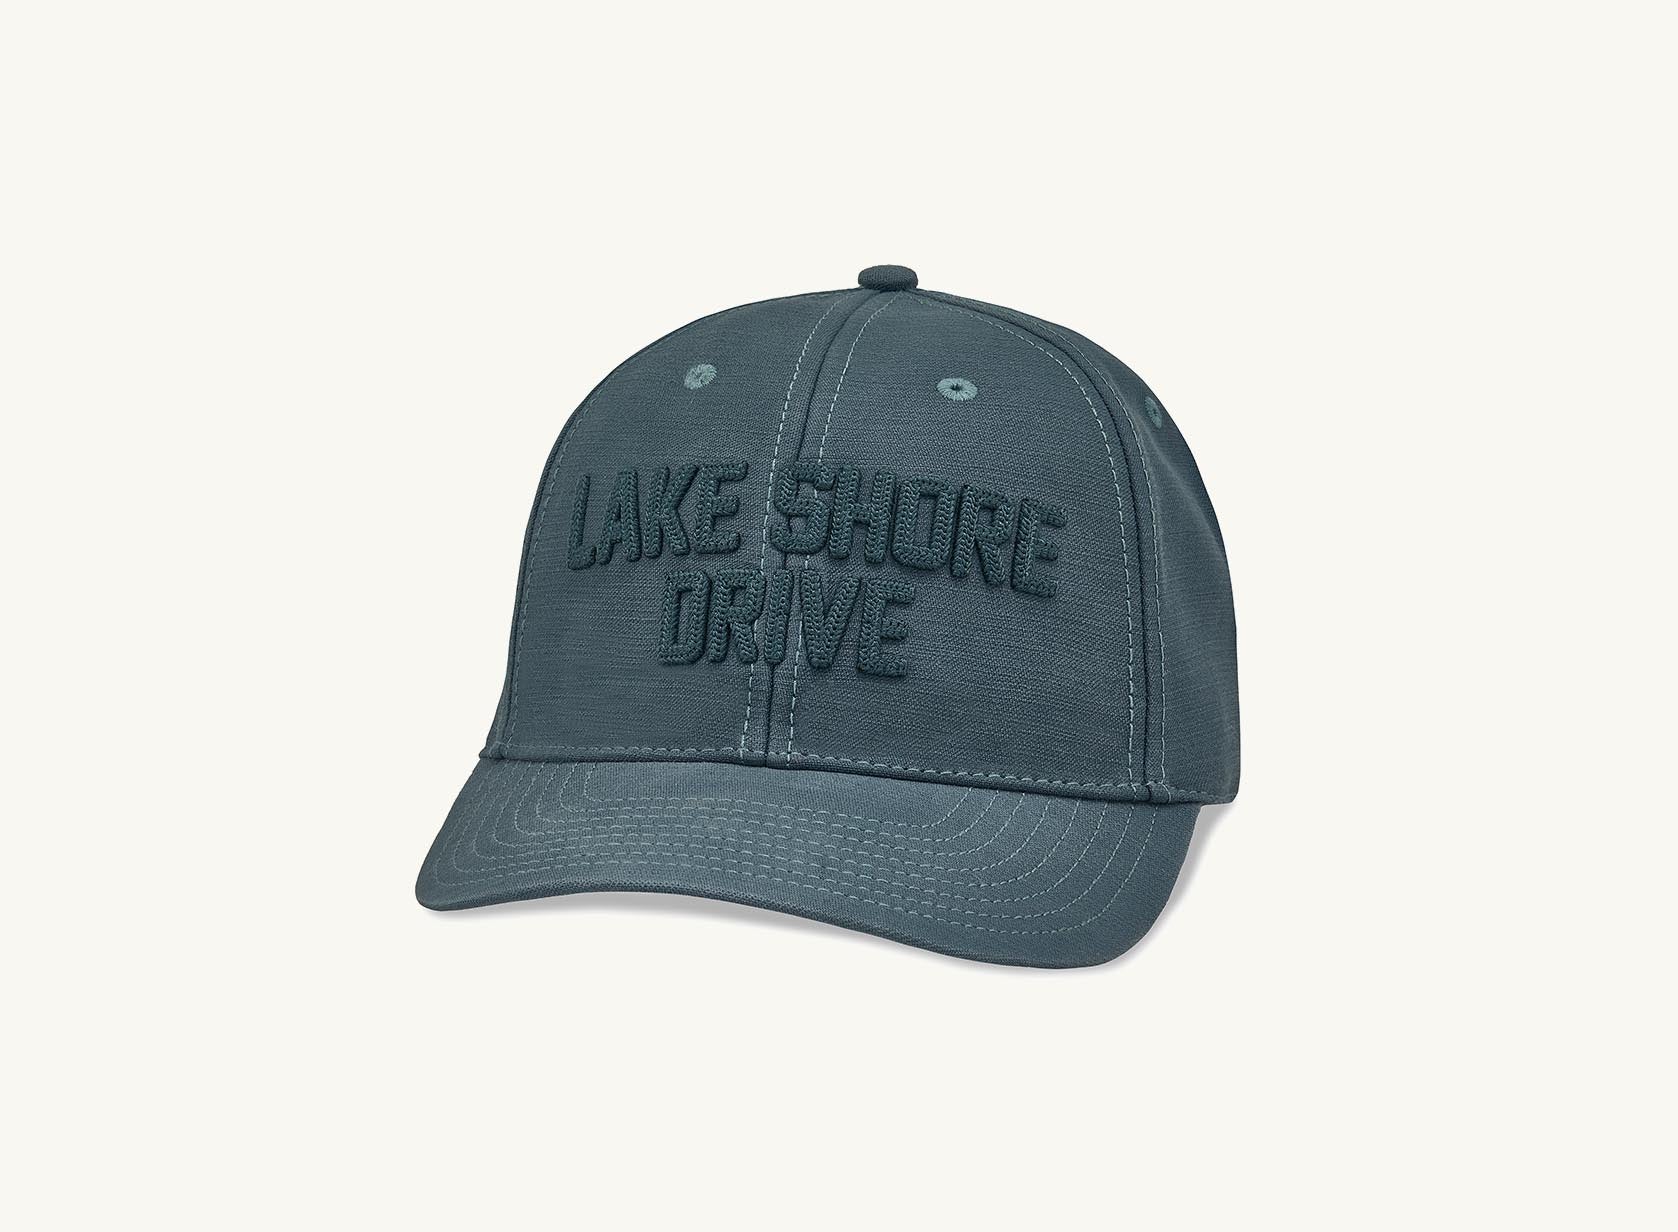 green lakeshore drive hat